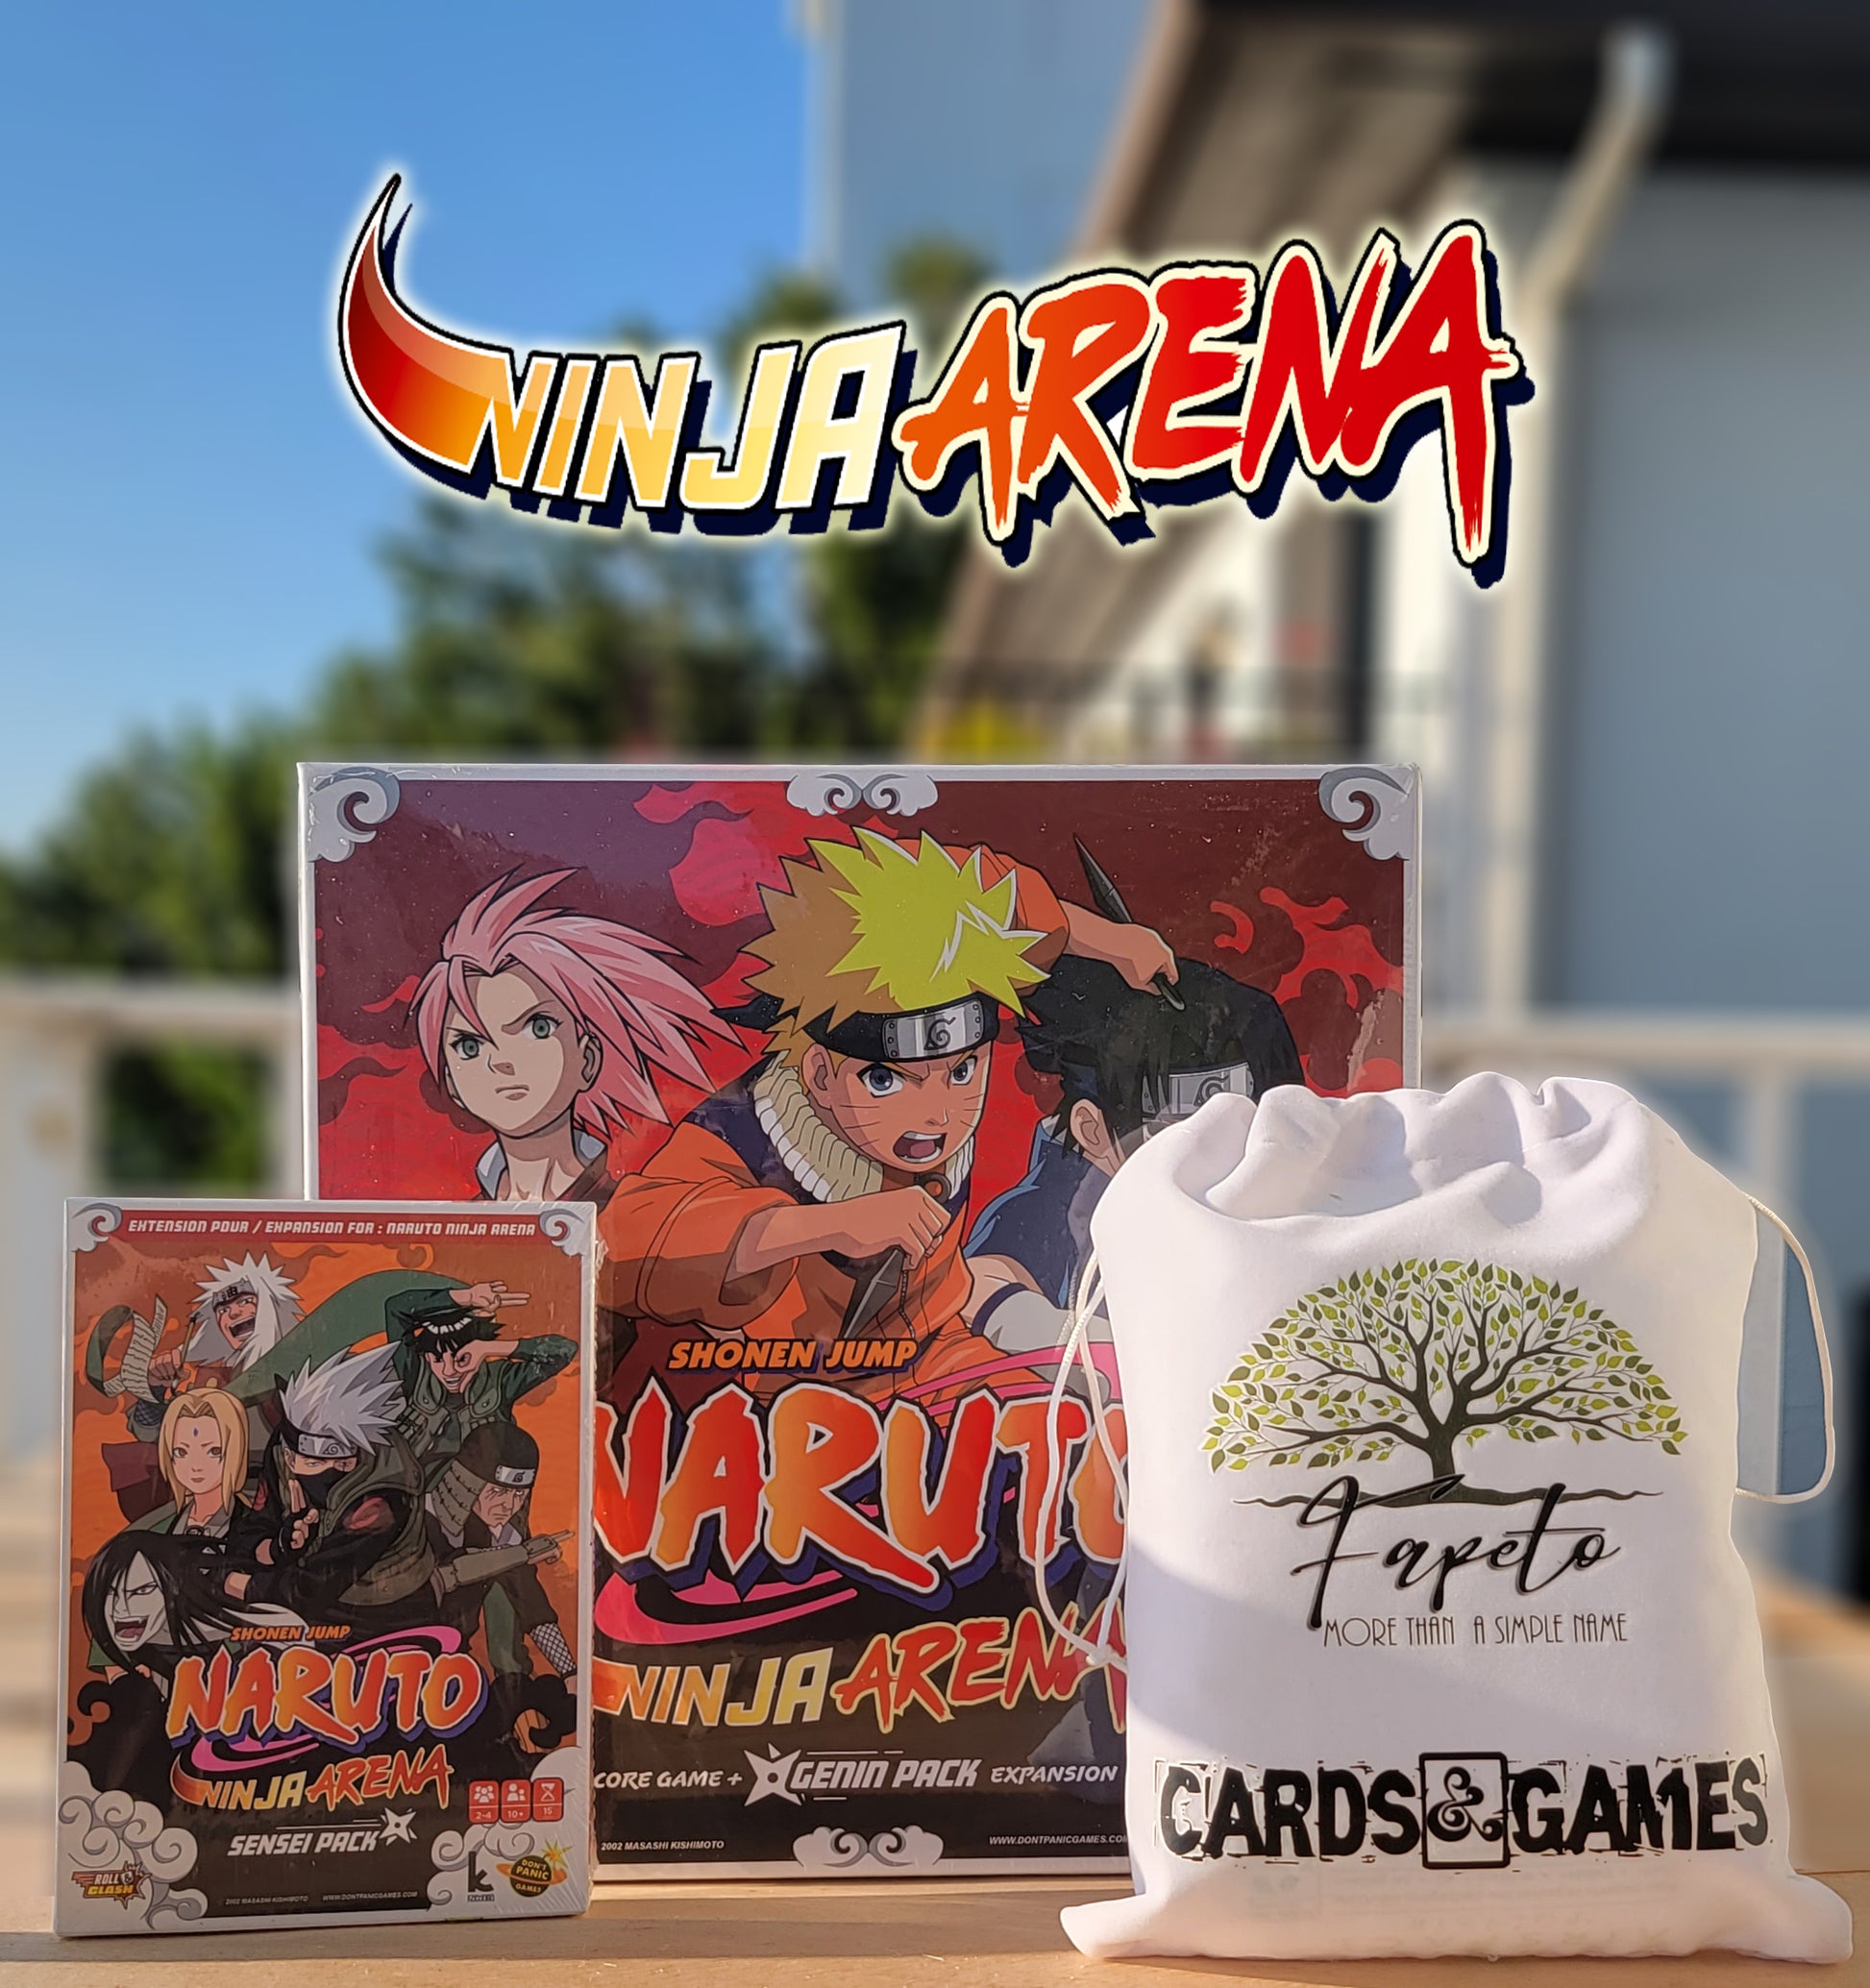 Naruto: Ninja Arena – Genin Pack Expansion, Board Game